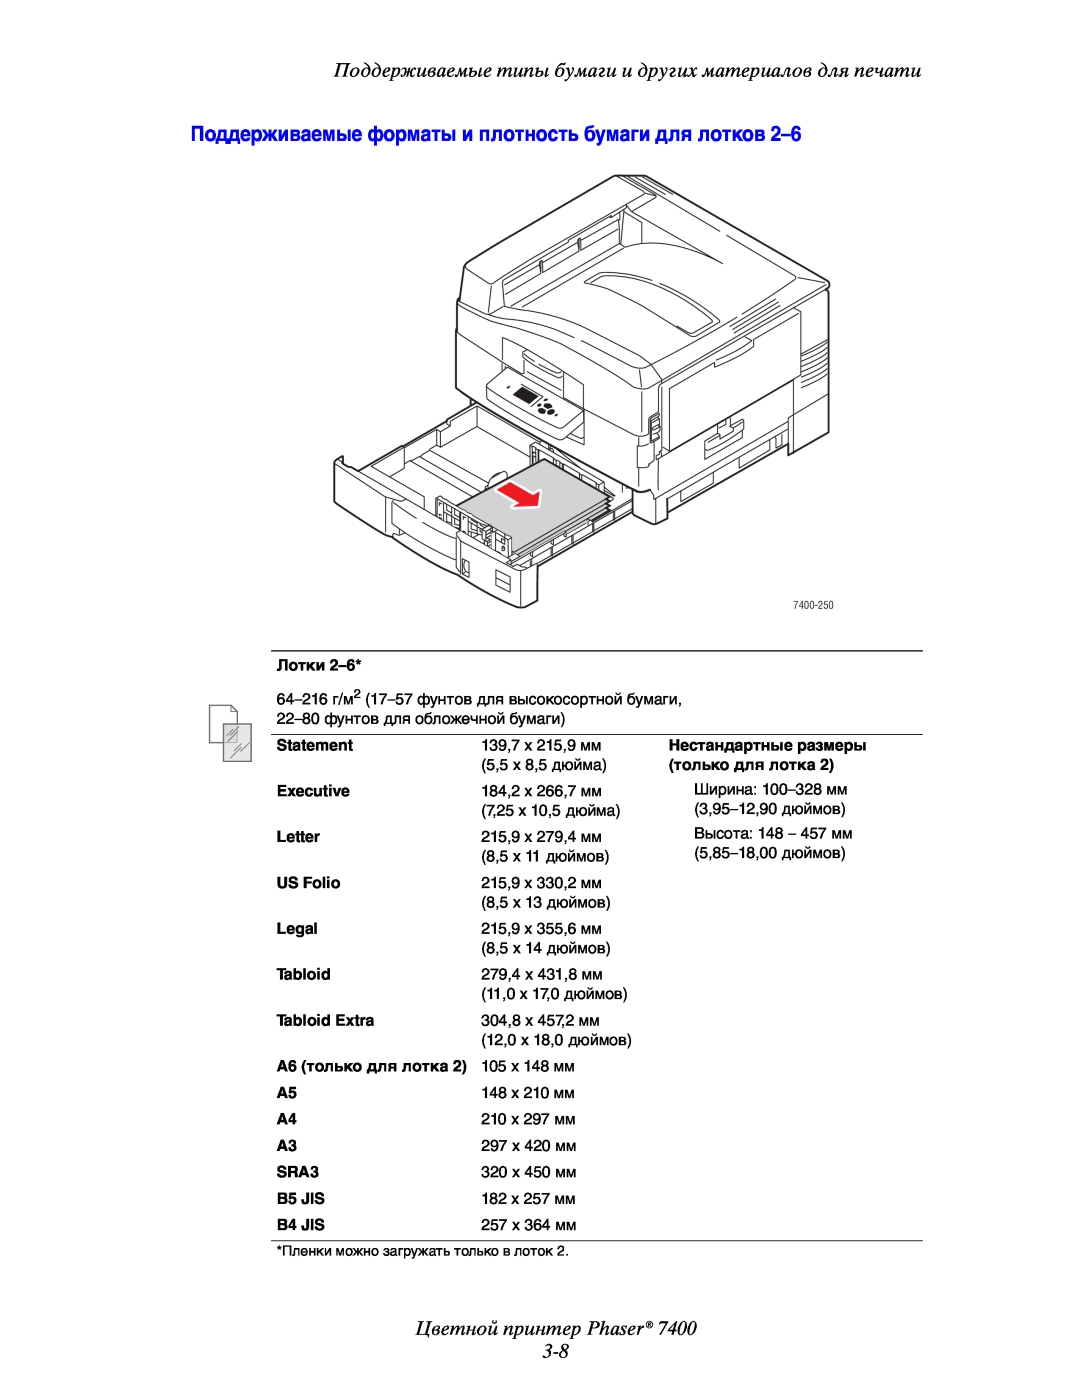 Xerox 7400 manual Цветной принтер Phaser 3-8 